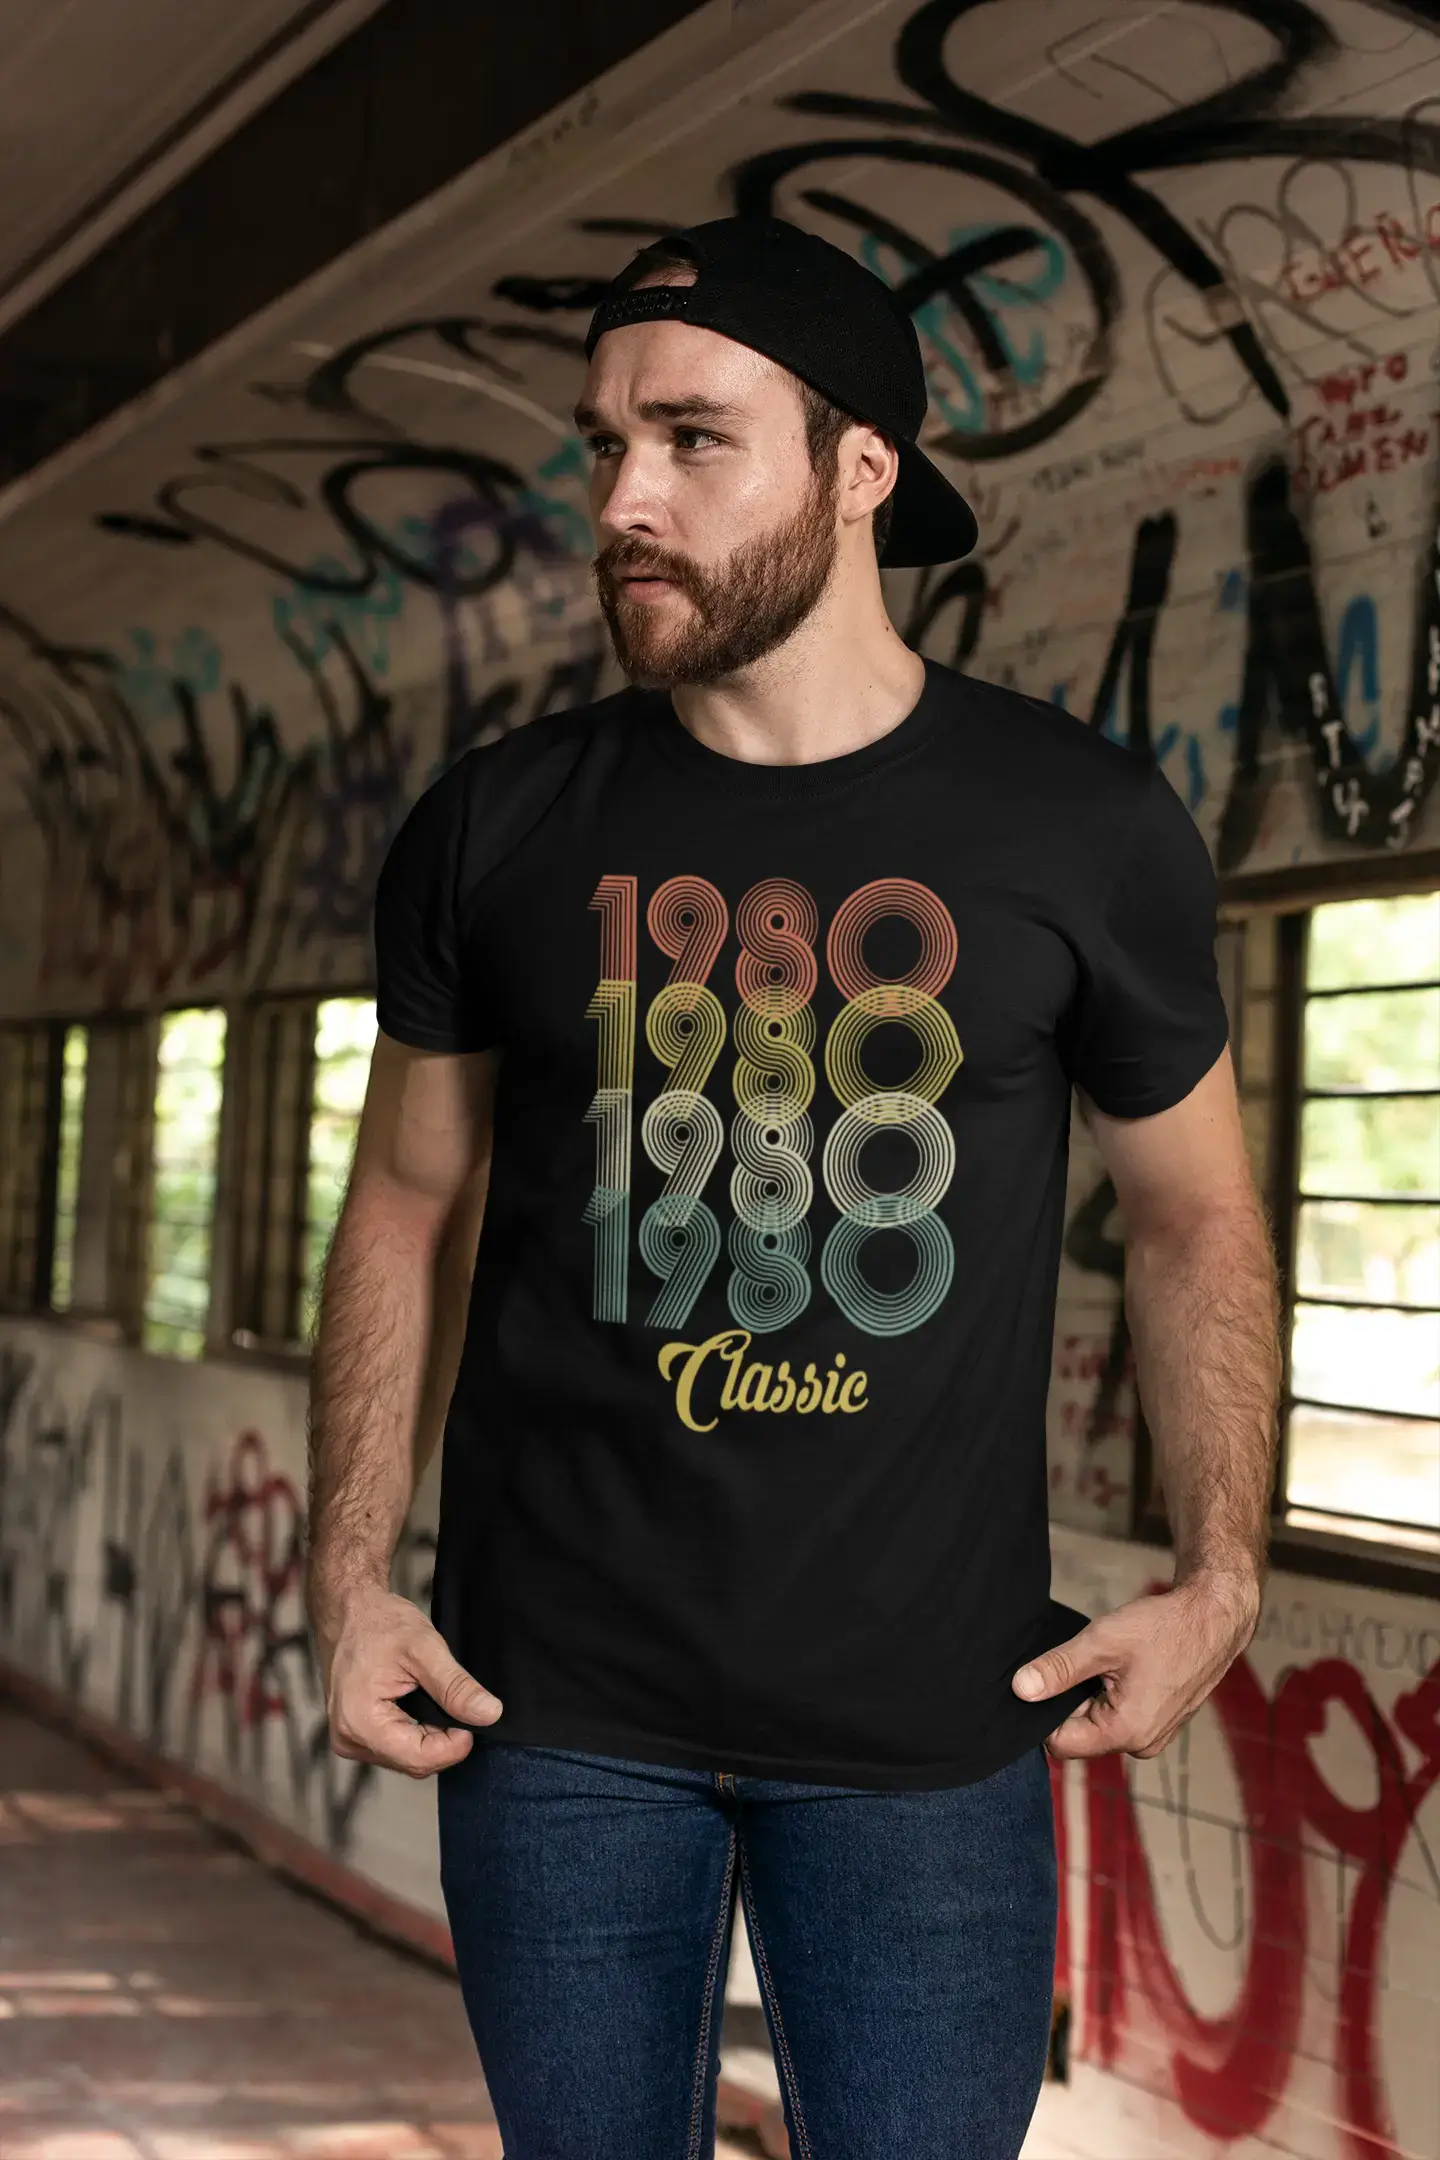 ULTRABASIC Herren T-Shirt Vintage 1980 Classic – Geschenk zum 40. Geburtstag